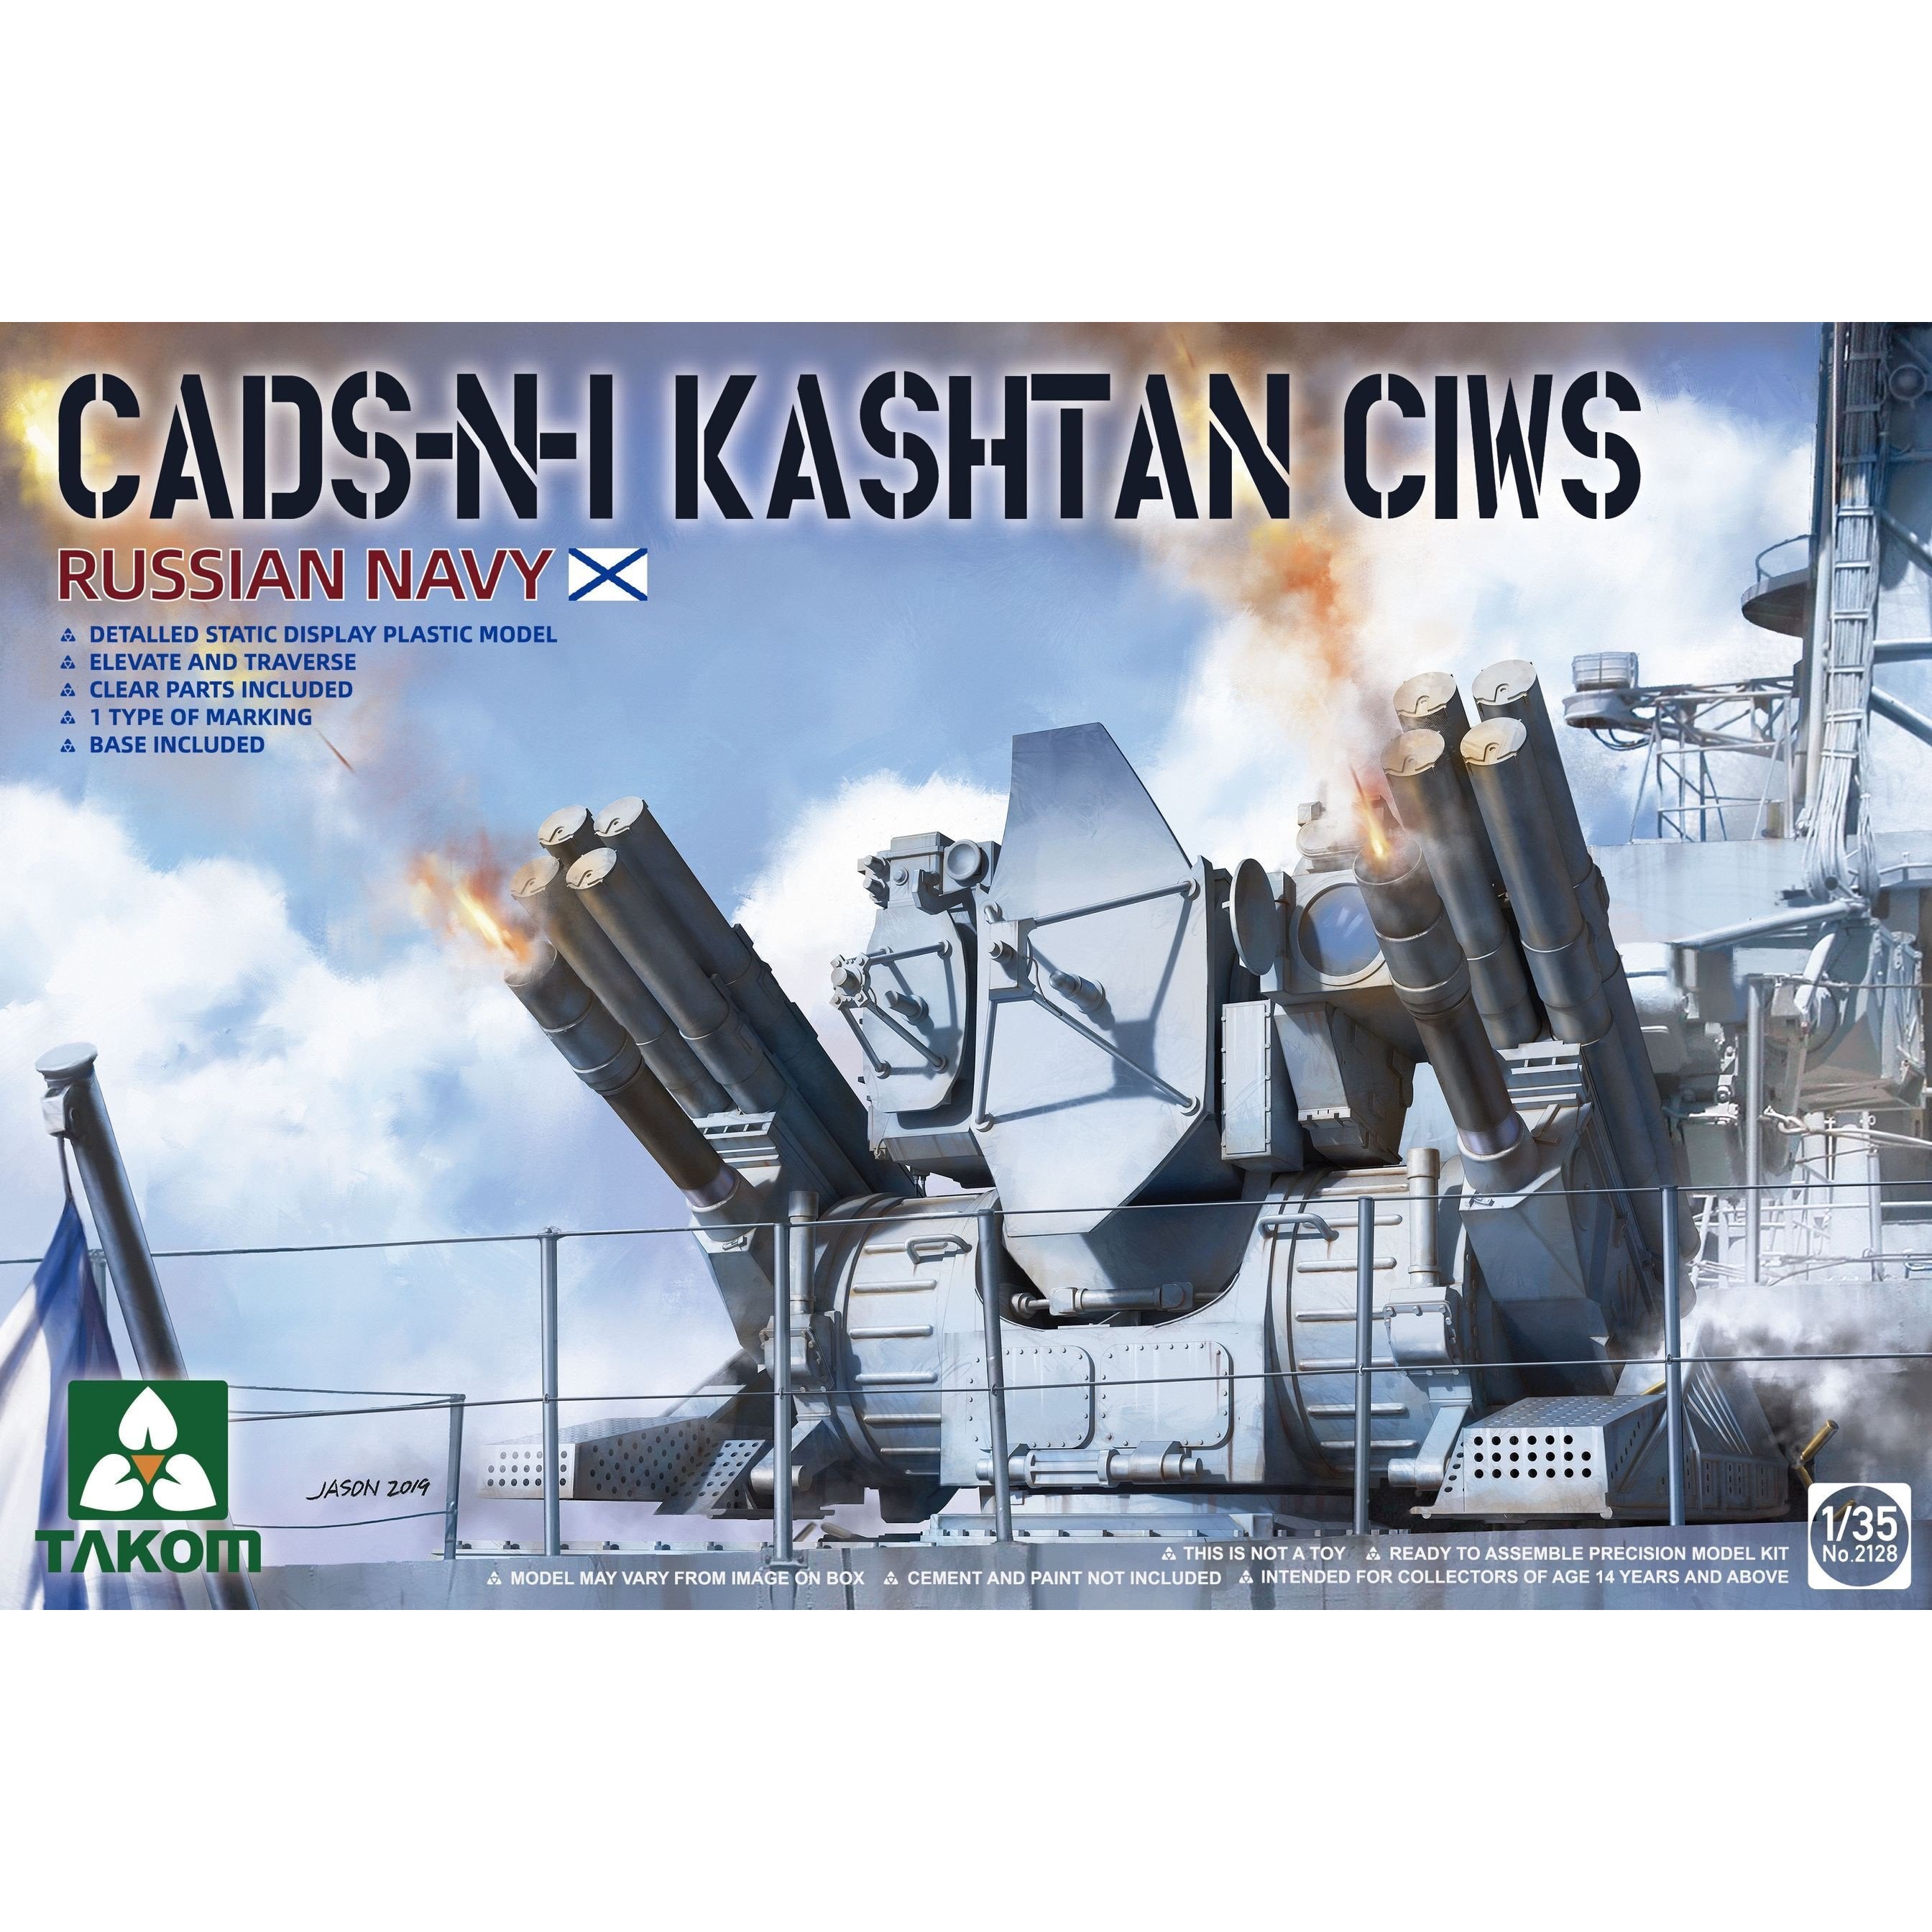 CADS-N-I Kashtan CIWS Russian Navy 1/35 #2128 by Takom